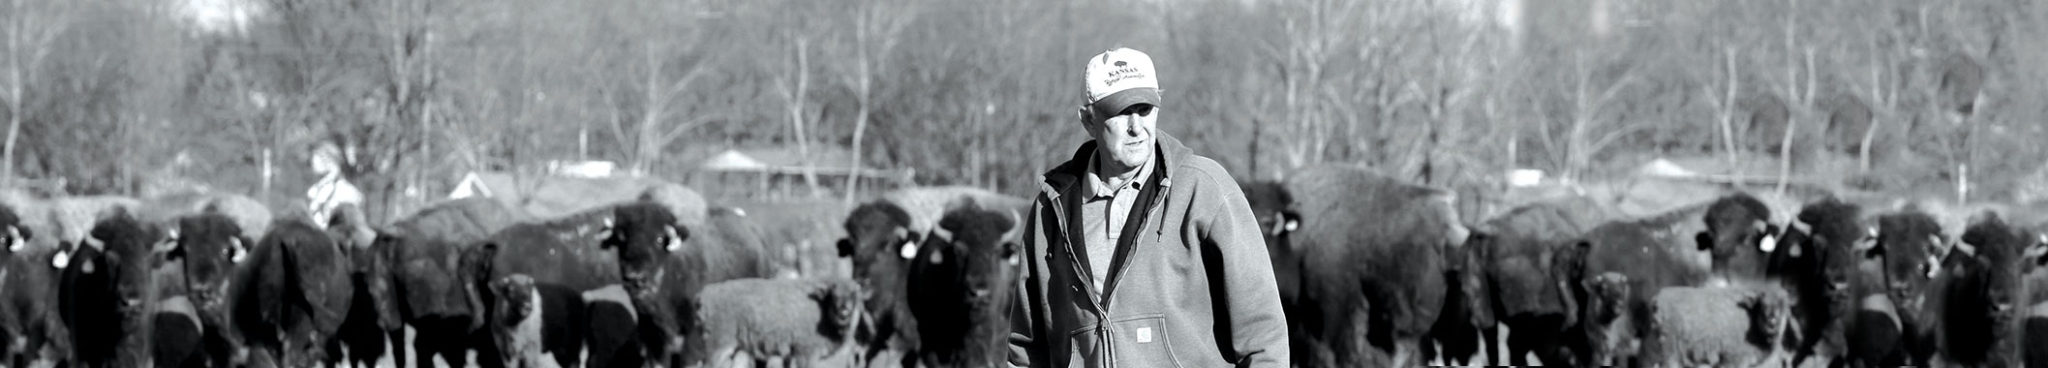 ORIJEN Bison Dog Treats - Bob of Bluegrass Bison in Shelbyville, Kentucky. Trusted supplier of fresh ranch-raised bison. - Man on a bison ranch.